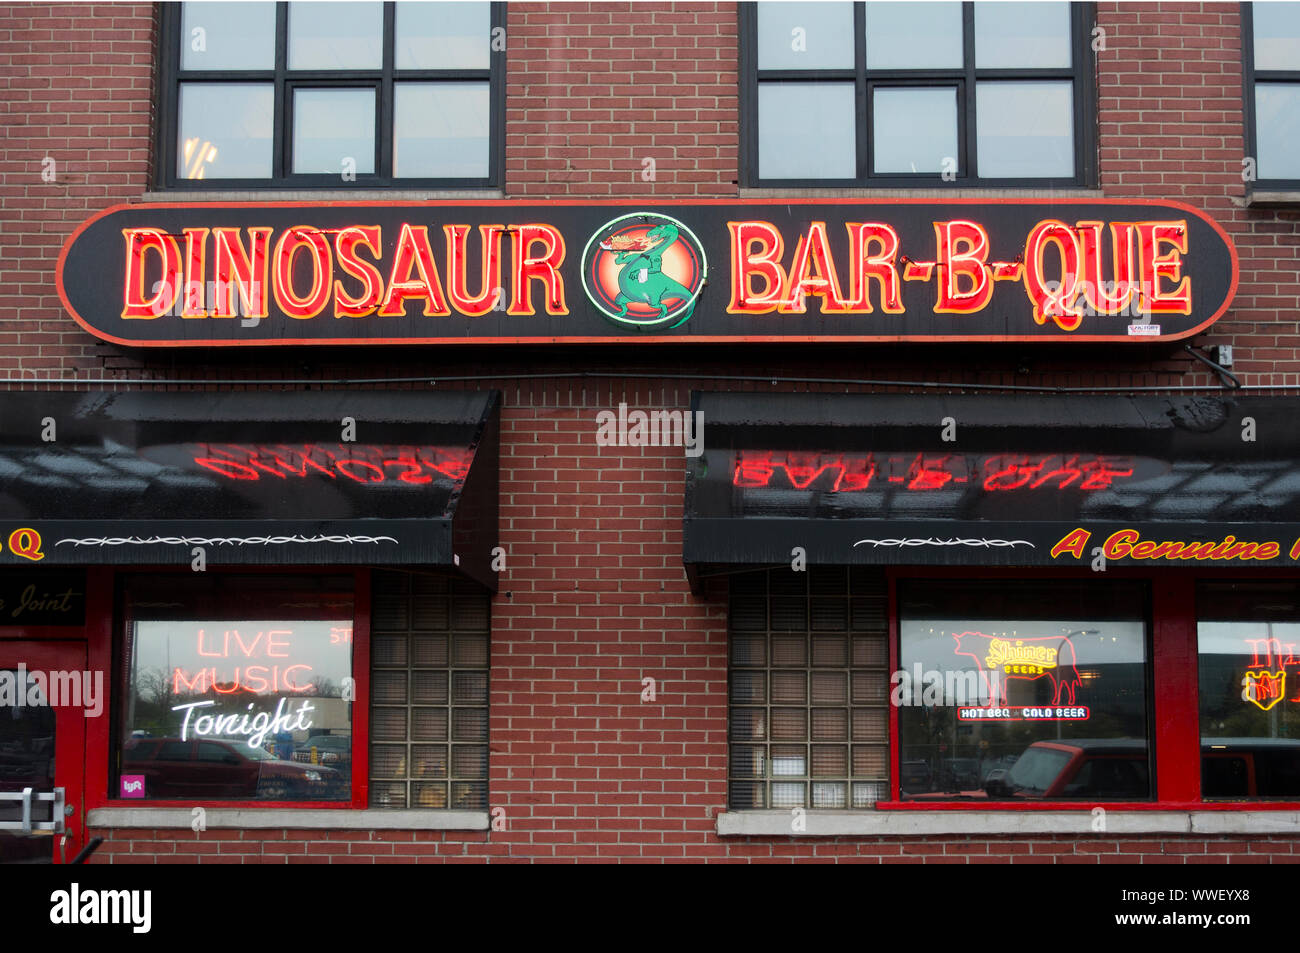 Barbecue à motif dinosaure à Syracuse, NY Banque D'Images